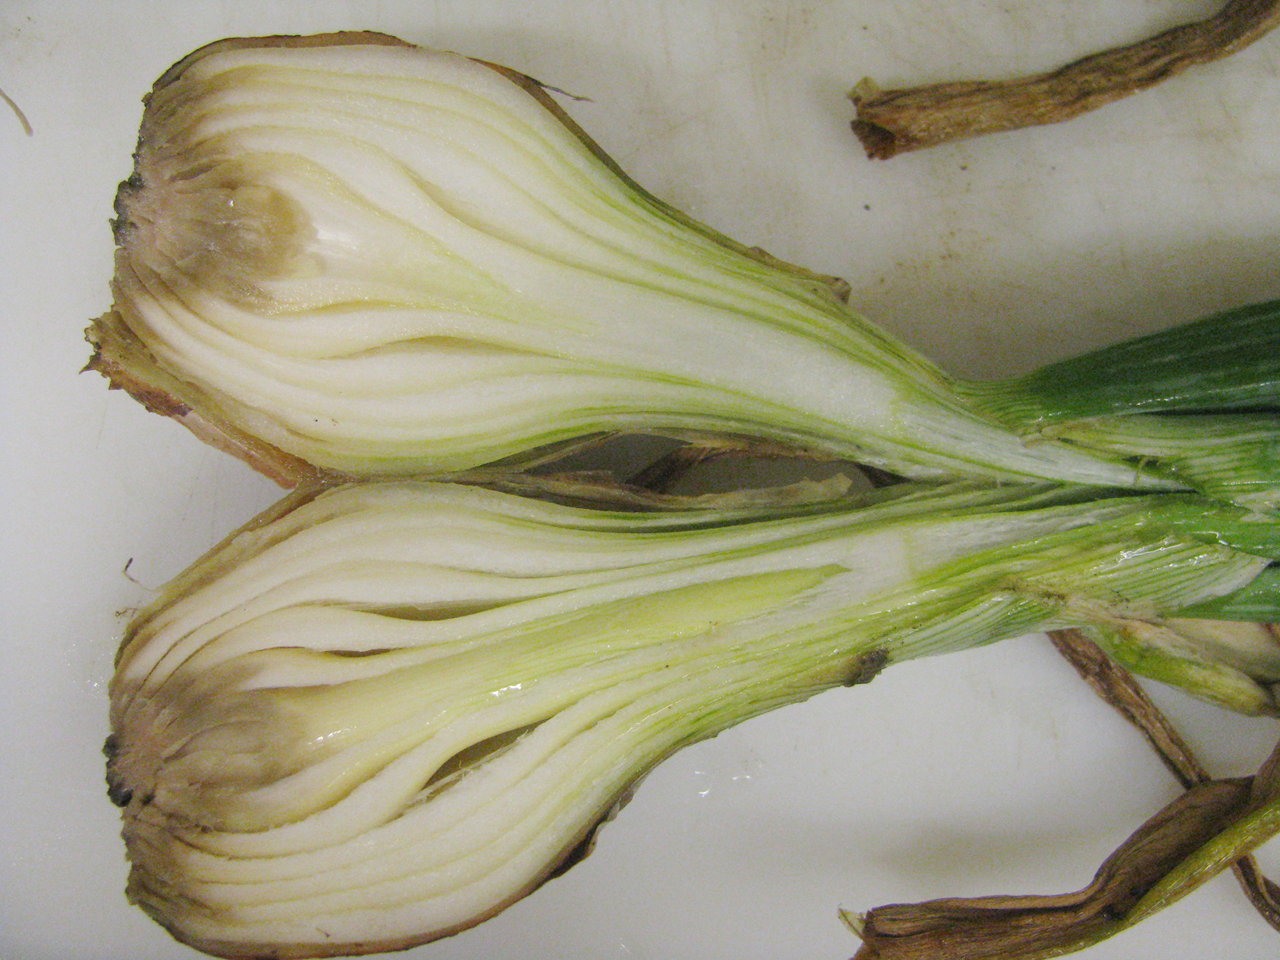 Photo of Fusarium
		basal rot of onion bulbs of the cultivar Gunnison caused by Fusarium
		oxysporum f. sp. cepae.